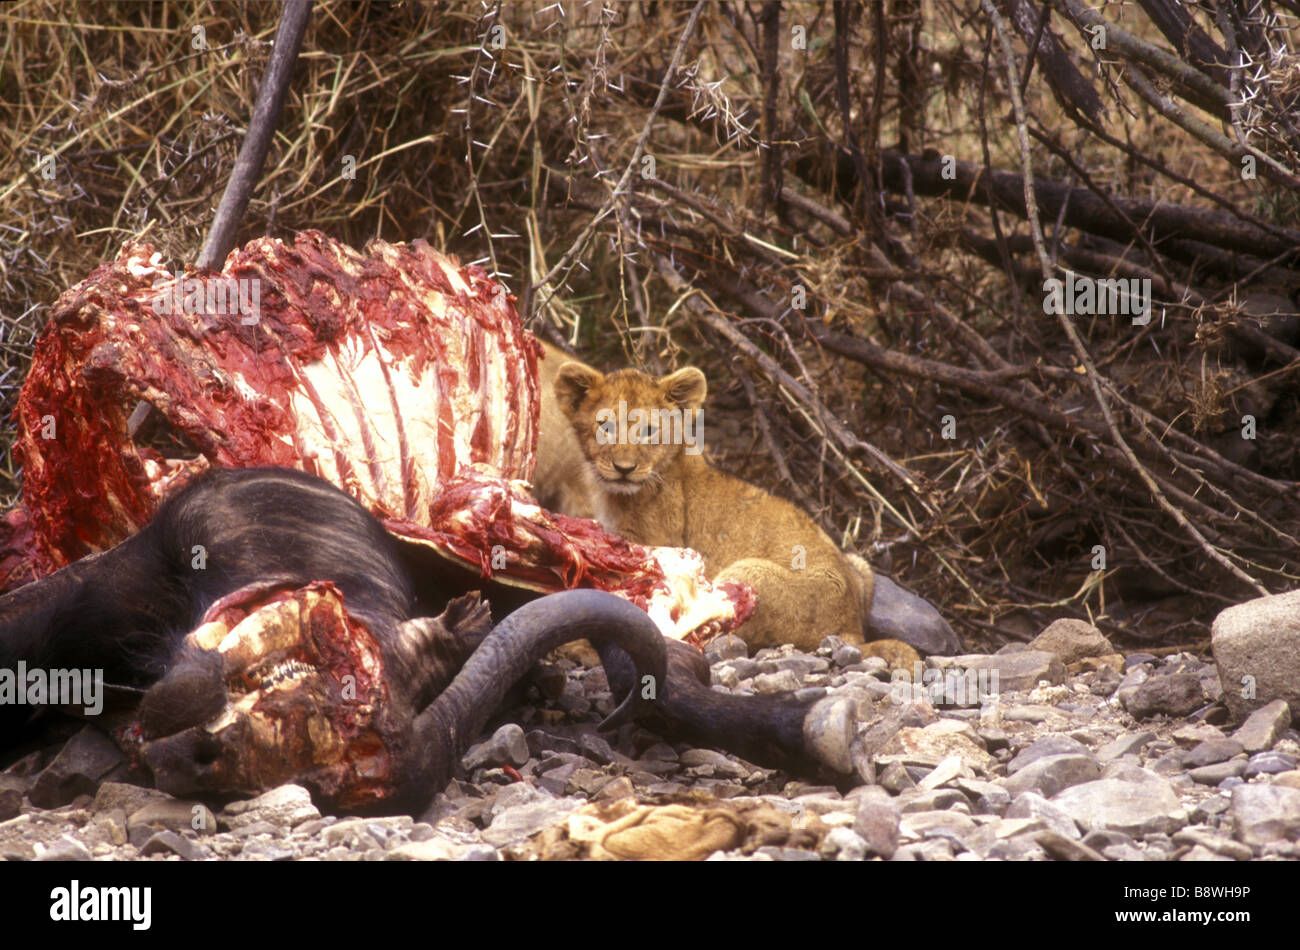 Young lion cub close to carcass of bufallo kill Serengeti National Park Tanzania East Africa Stock Photo